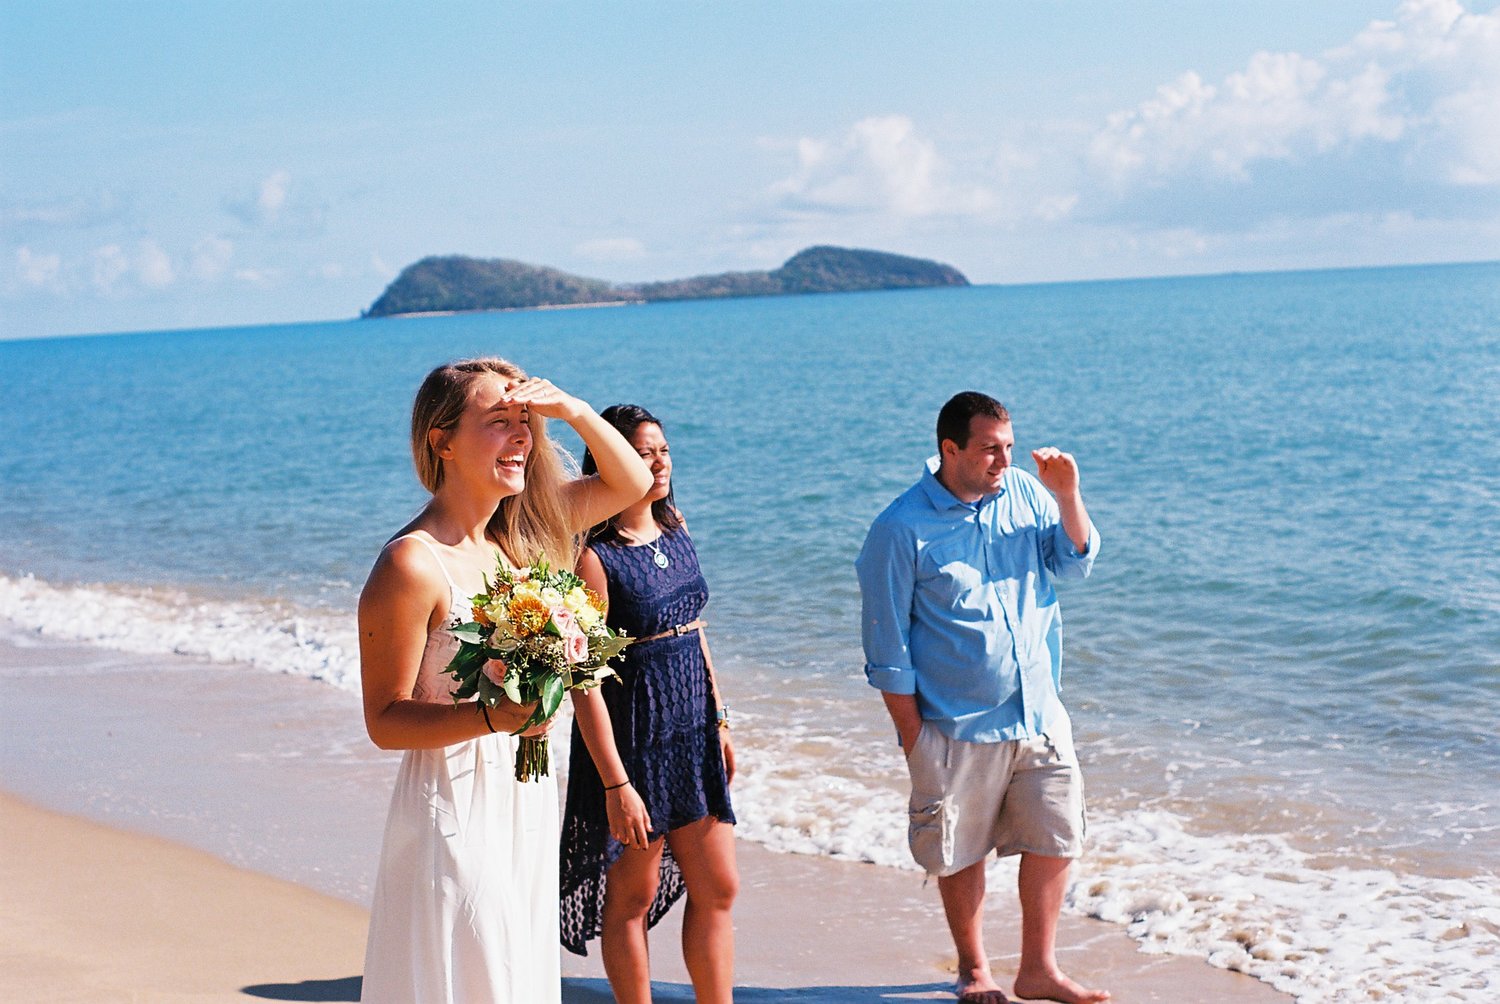 Craig + Ines analogue Cairns seaside elopement